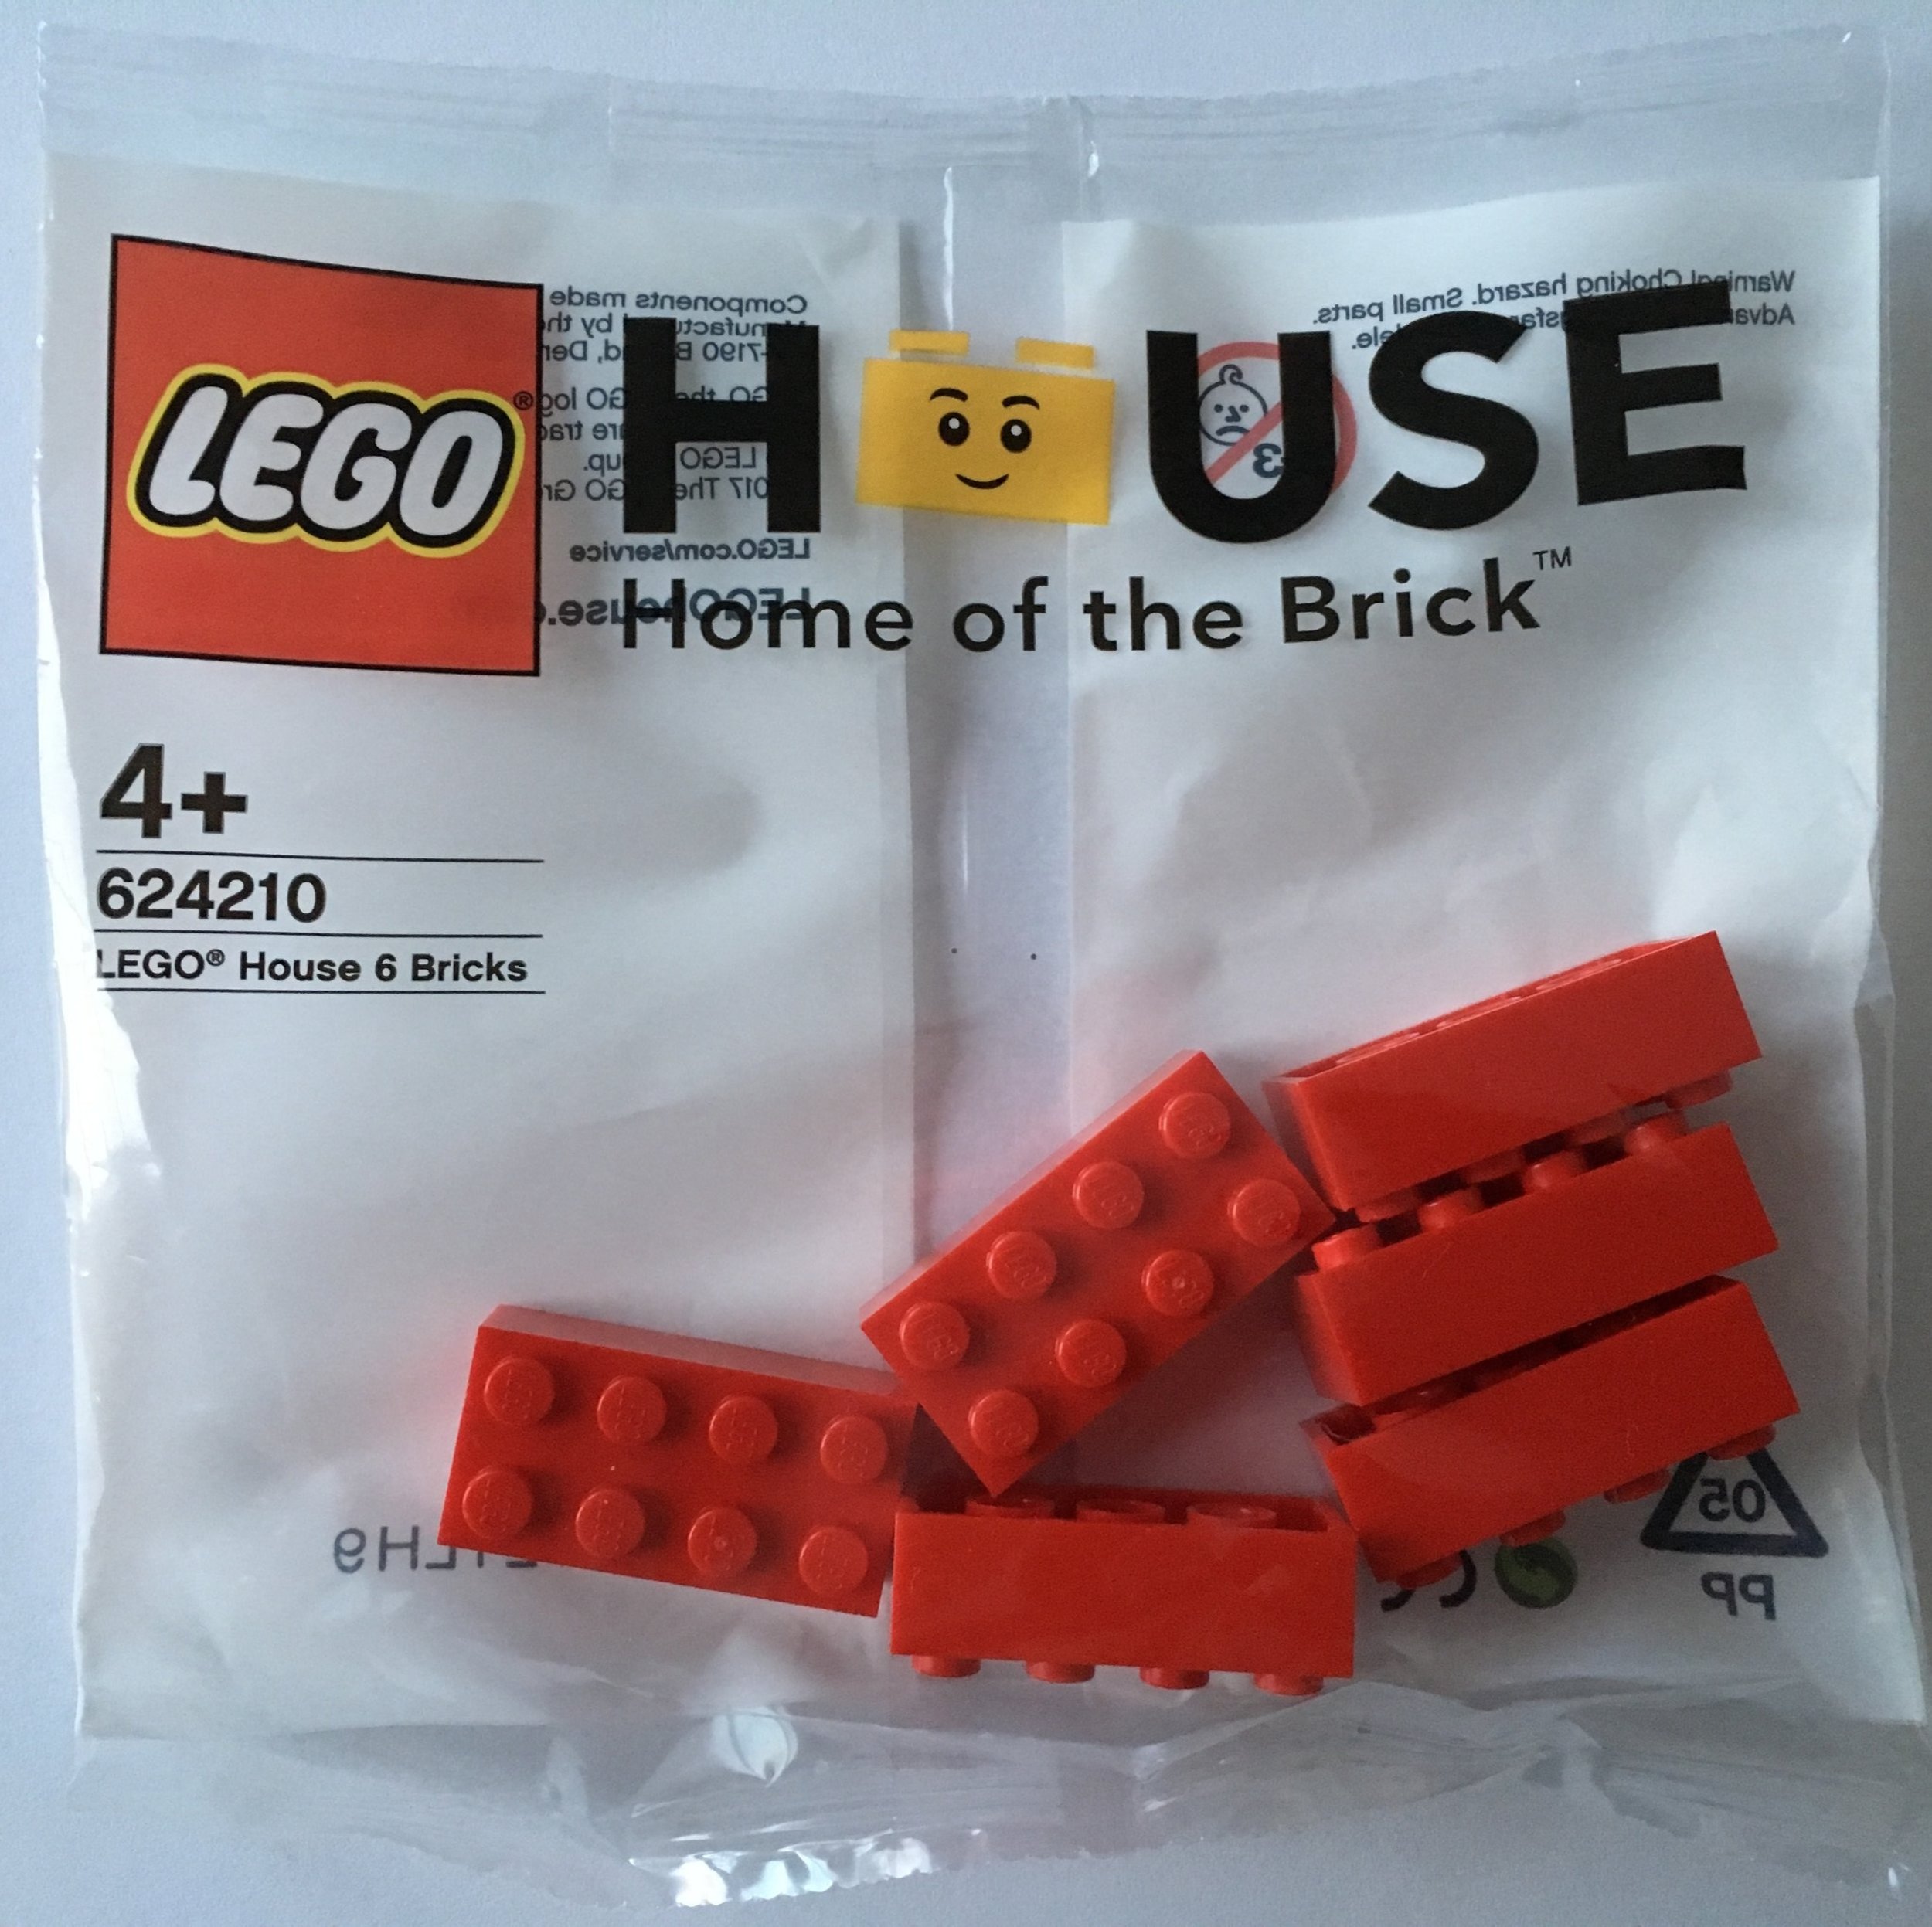 House: Zones (Part — Bricks for Bricks